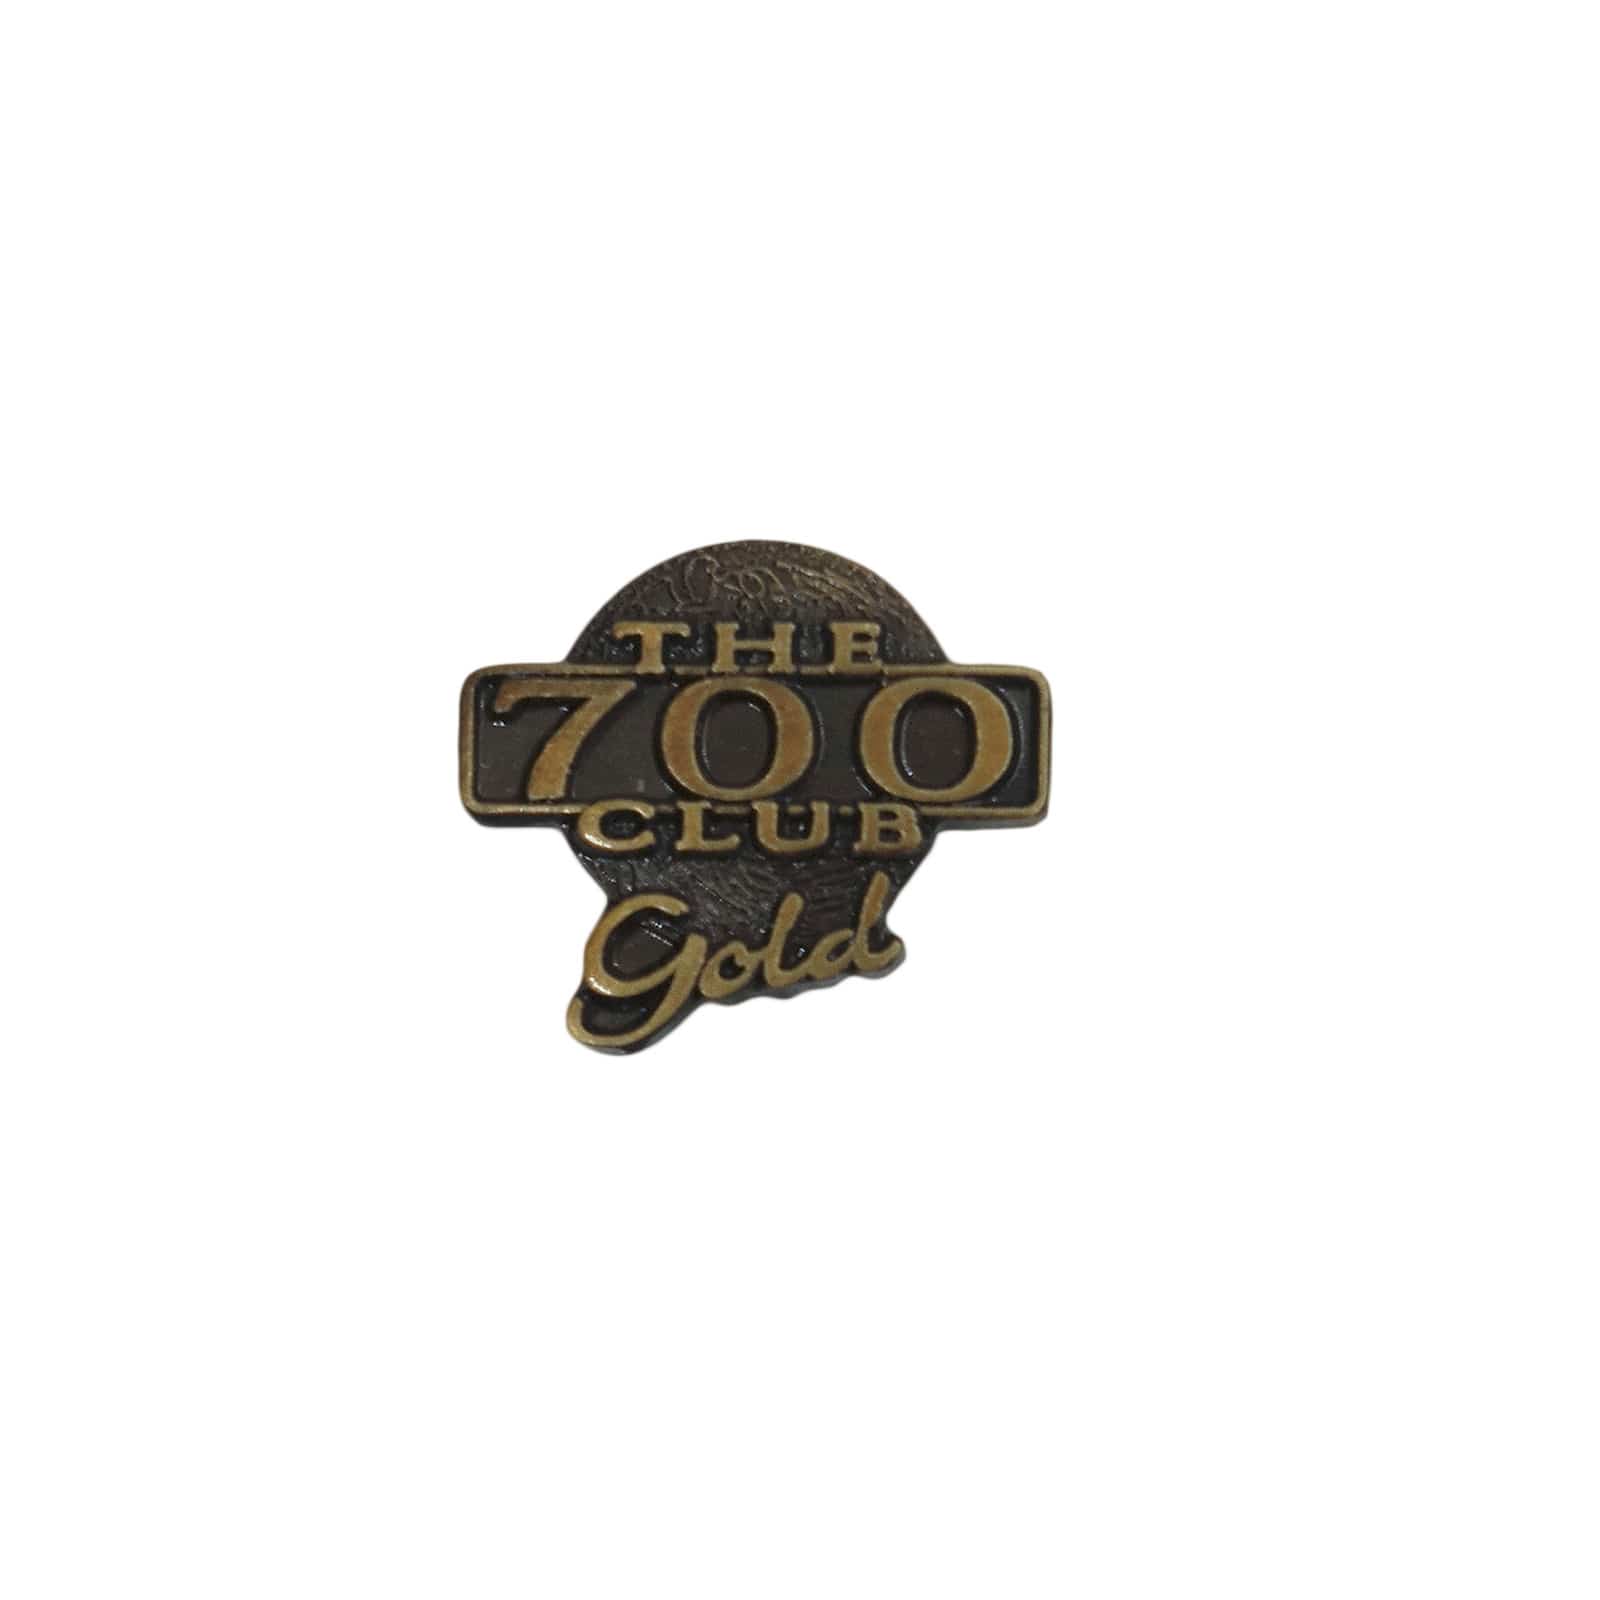 THE 700 CLUB ピンズ gold 留め具付き